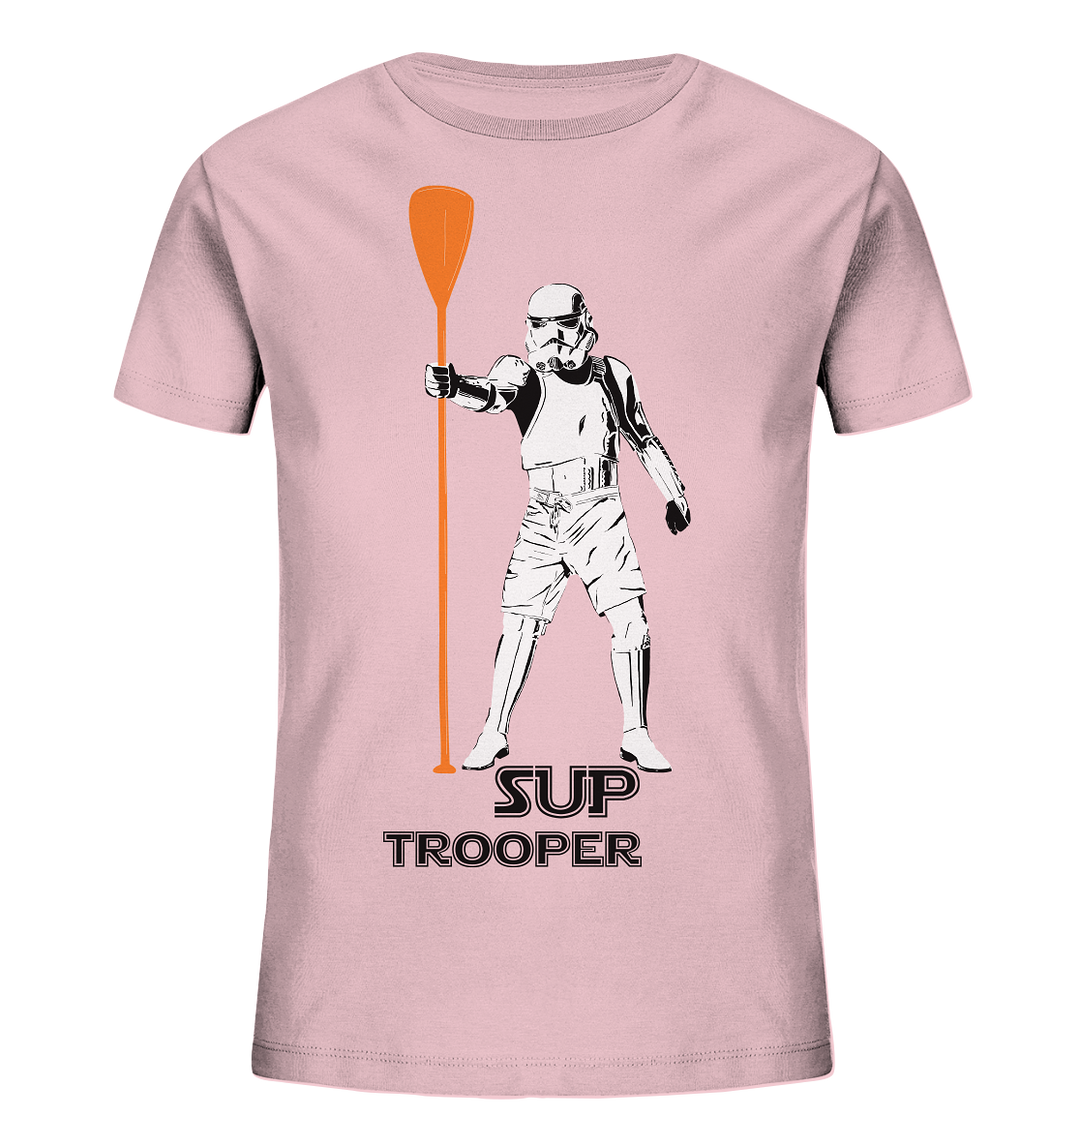 SUP Trooper - Kids Organic Shirt